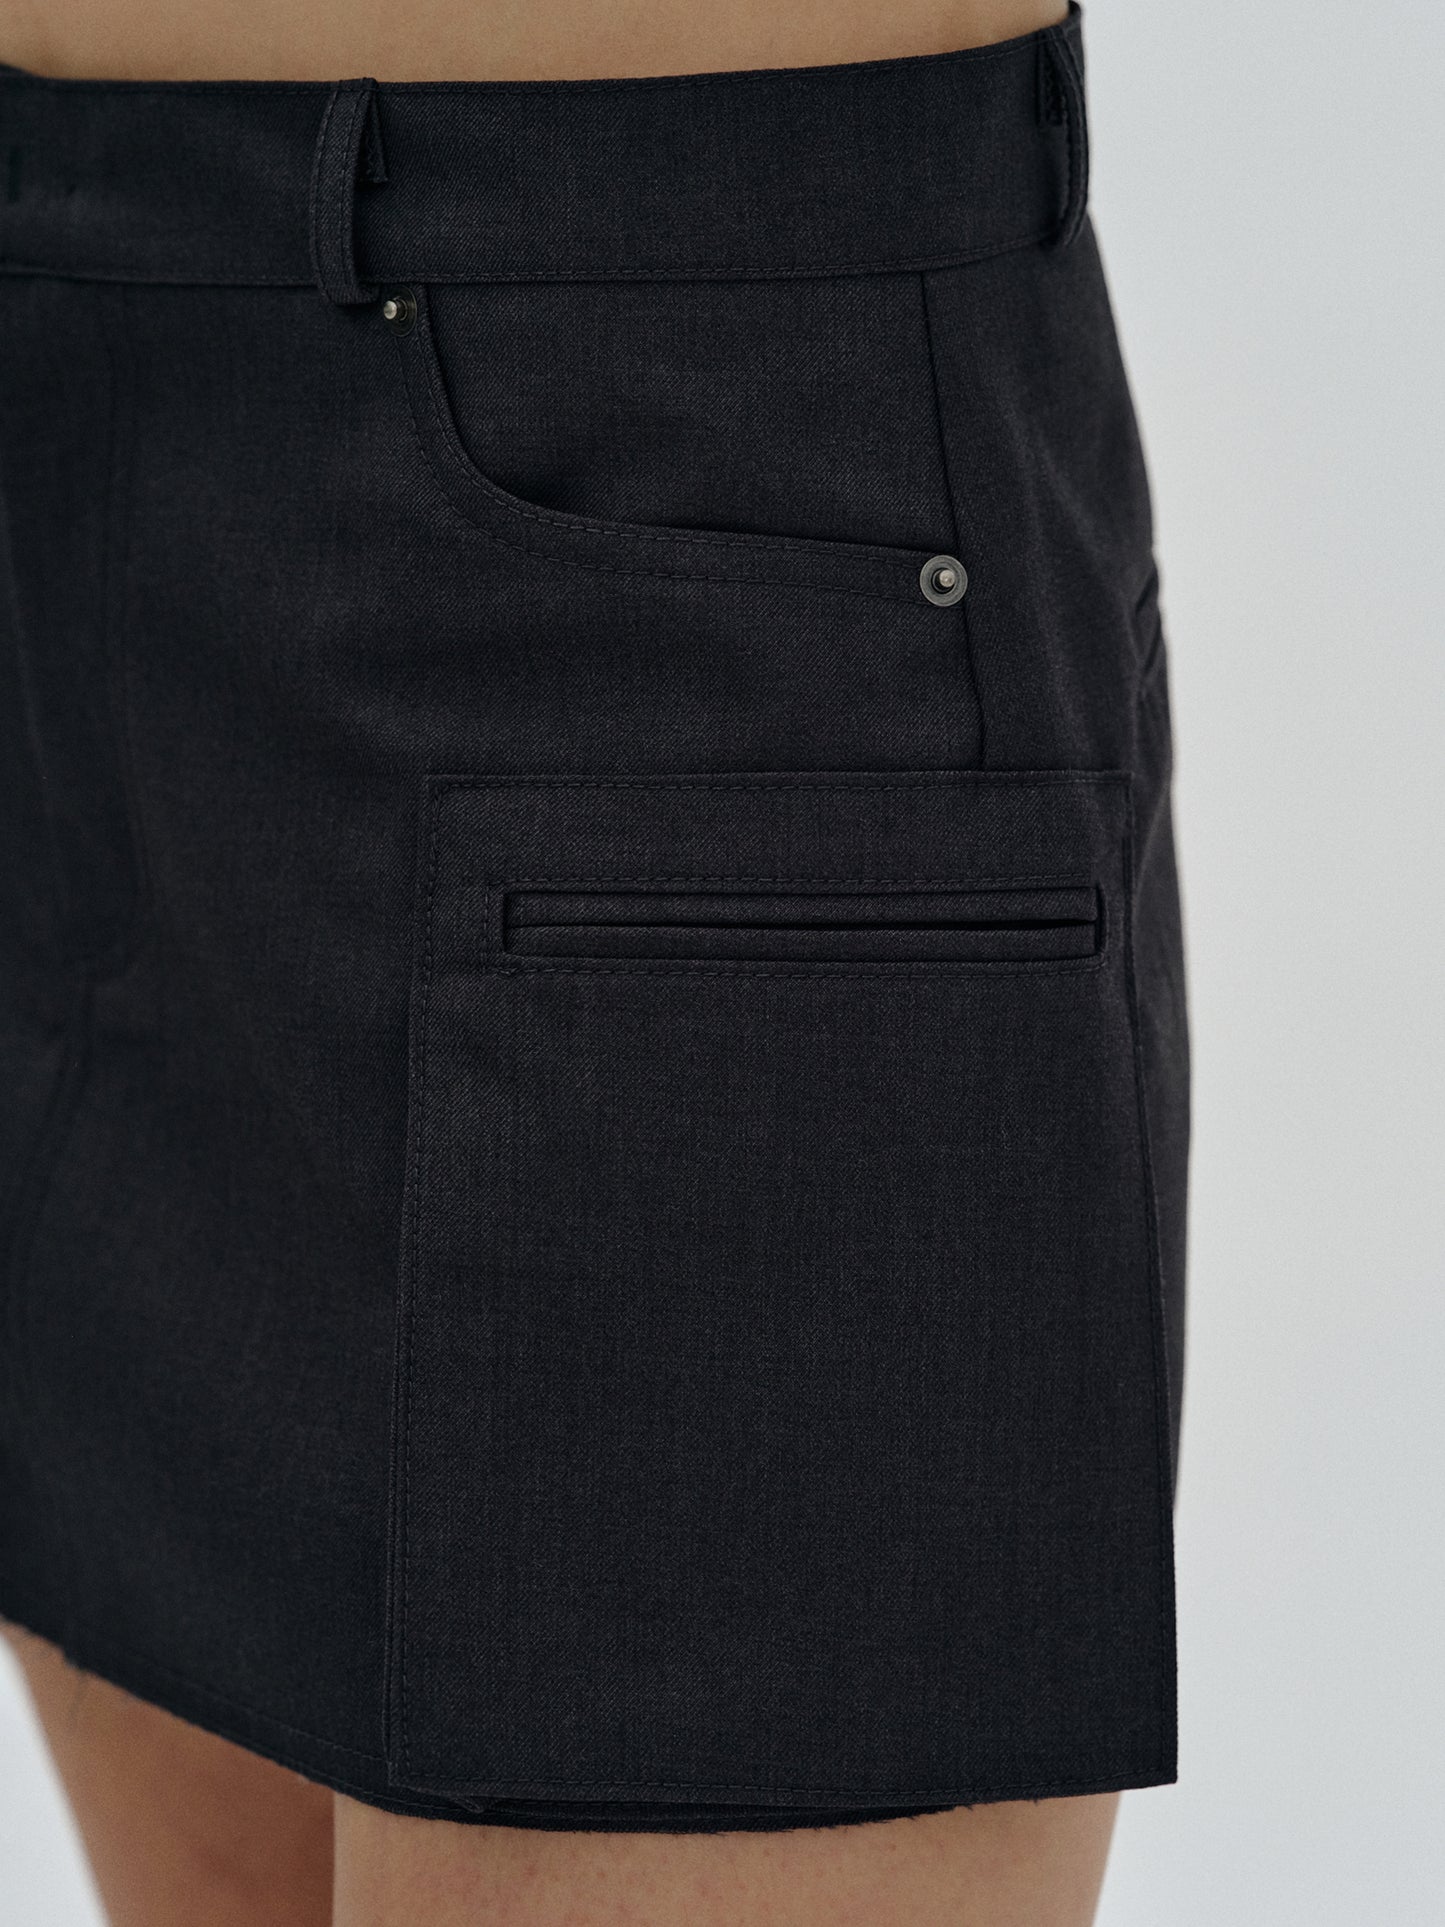 Welt Pocket Cargo Skirt, Dark Charcoal